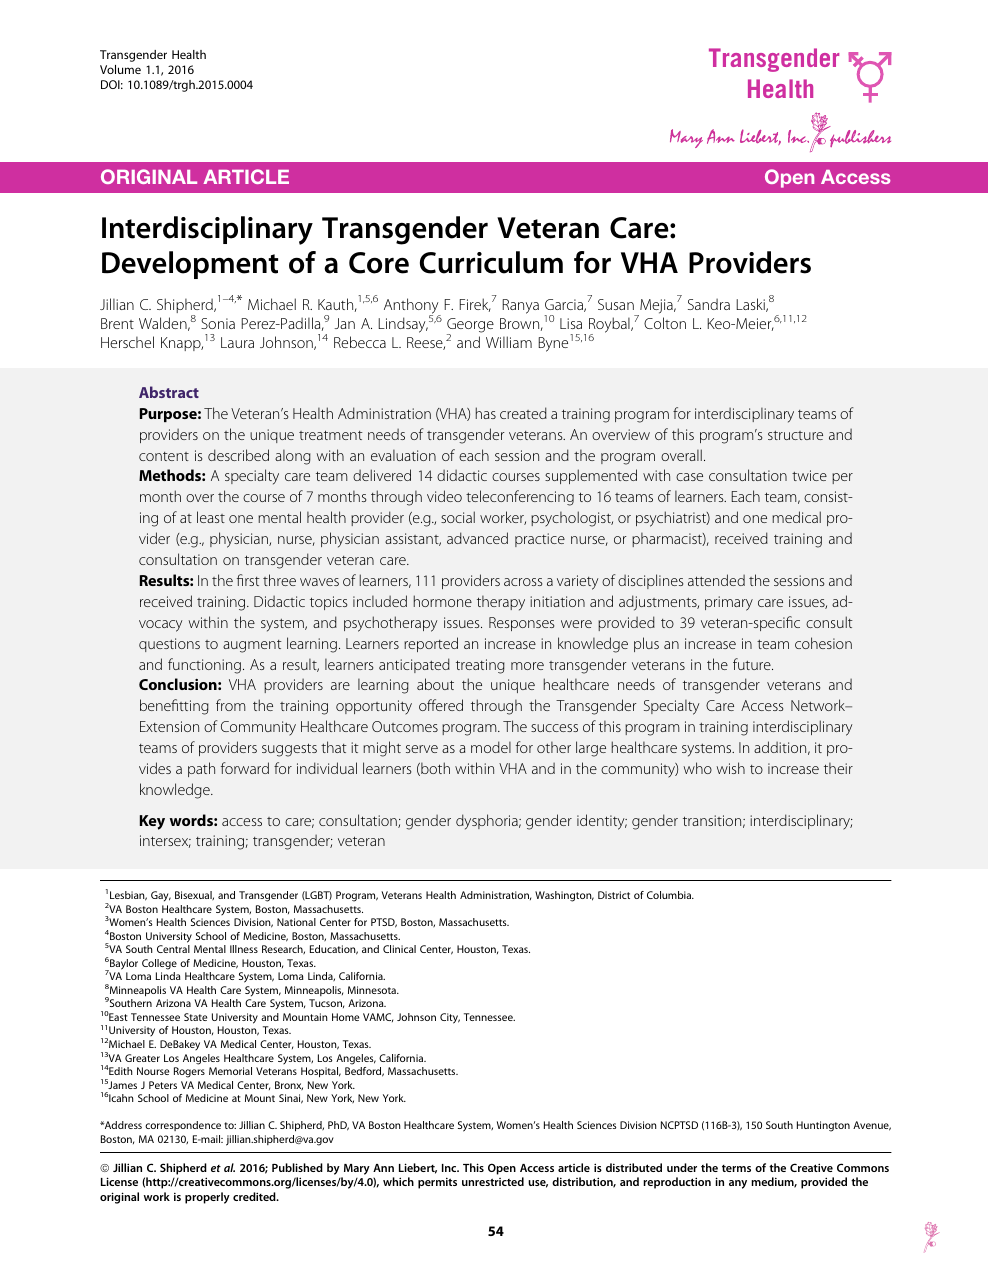 Interdisciplinary Transgender Veteran Care Development of a Core Curriculum for VHA Providers photo